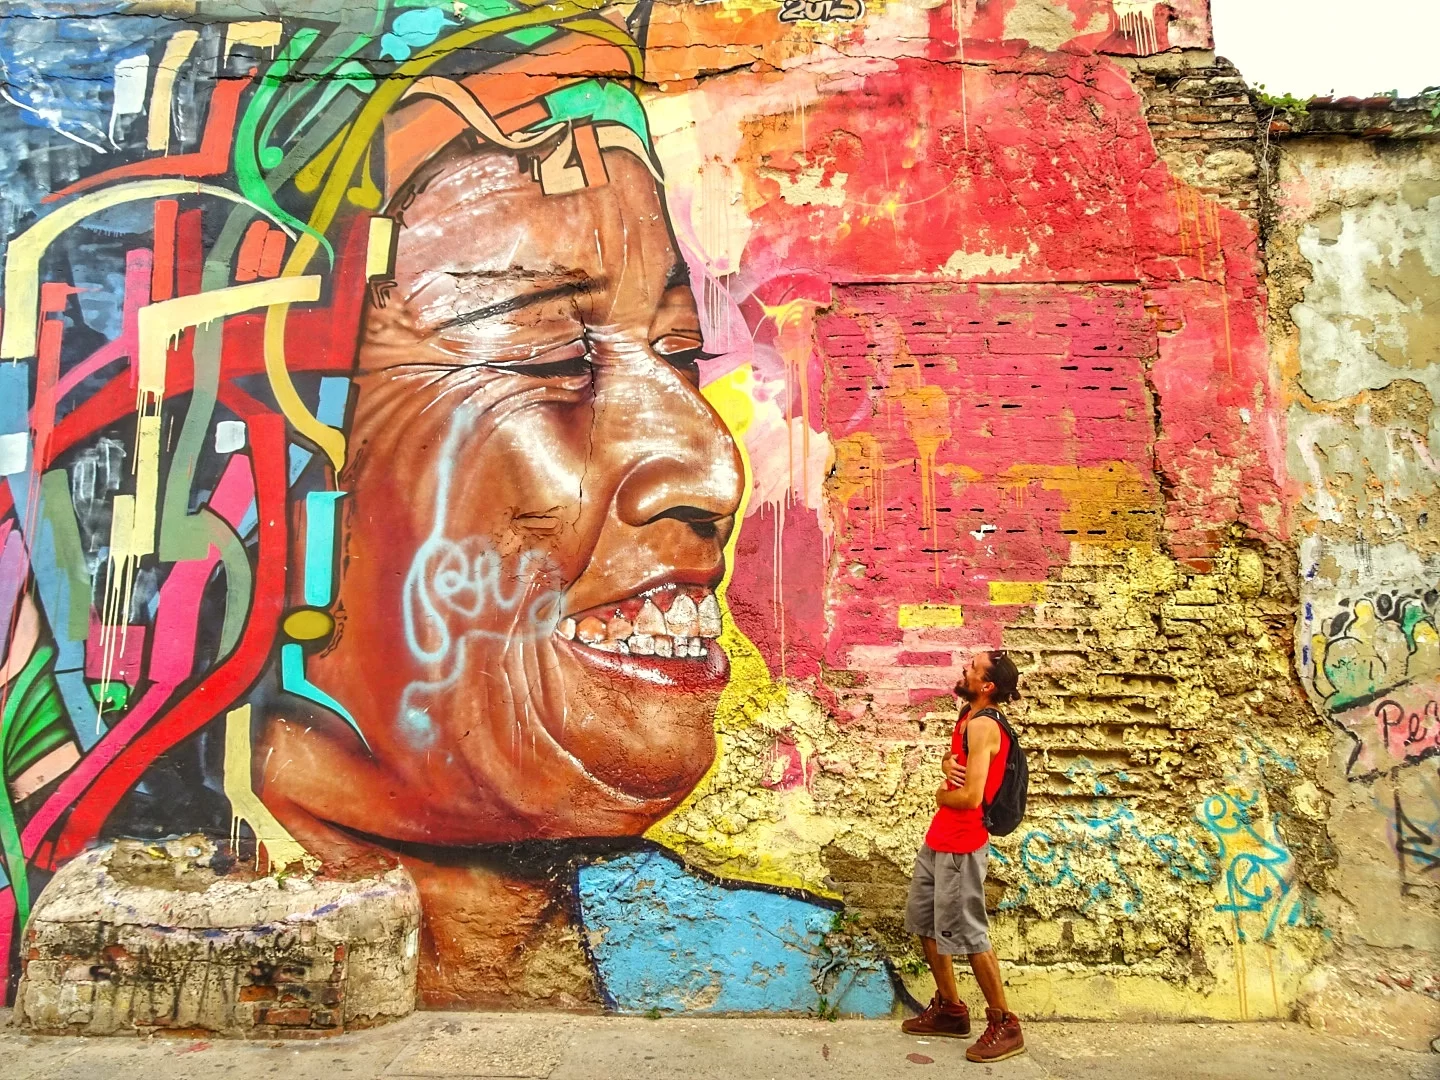 Colombia: Cartagena, The Tourist Capital